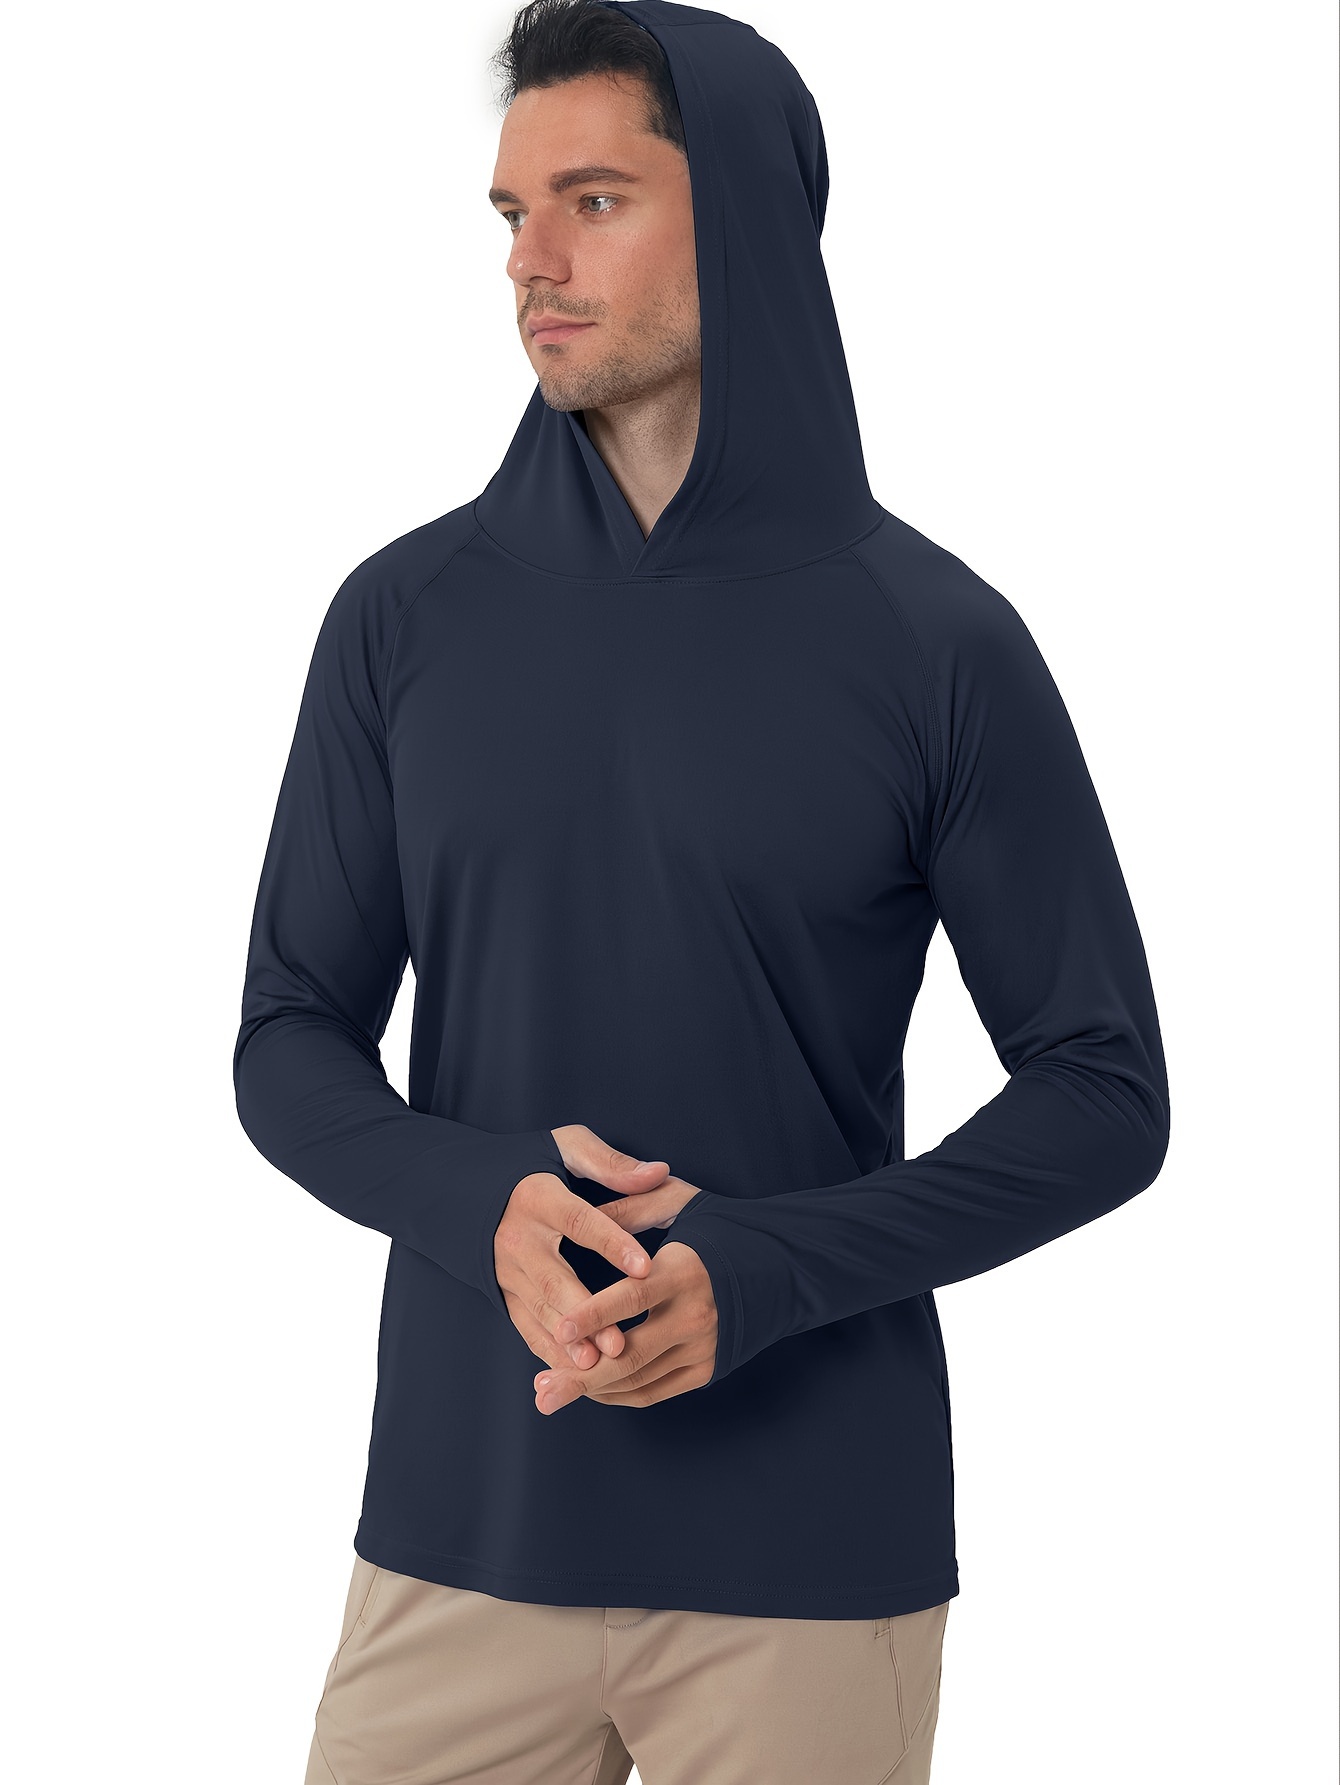 Men's Upf 50+ Sun Protection Hoodie Shirt Long Sleeve Rash Guard Fishing SPF Outdoor UV Shirt Lightweight